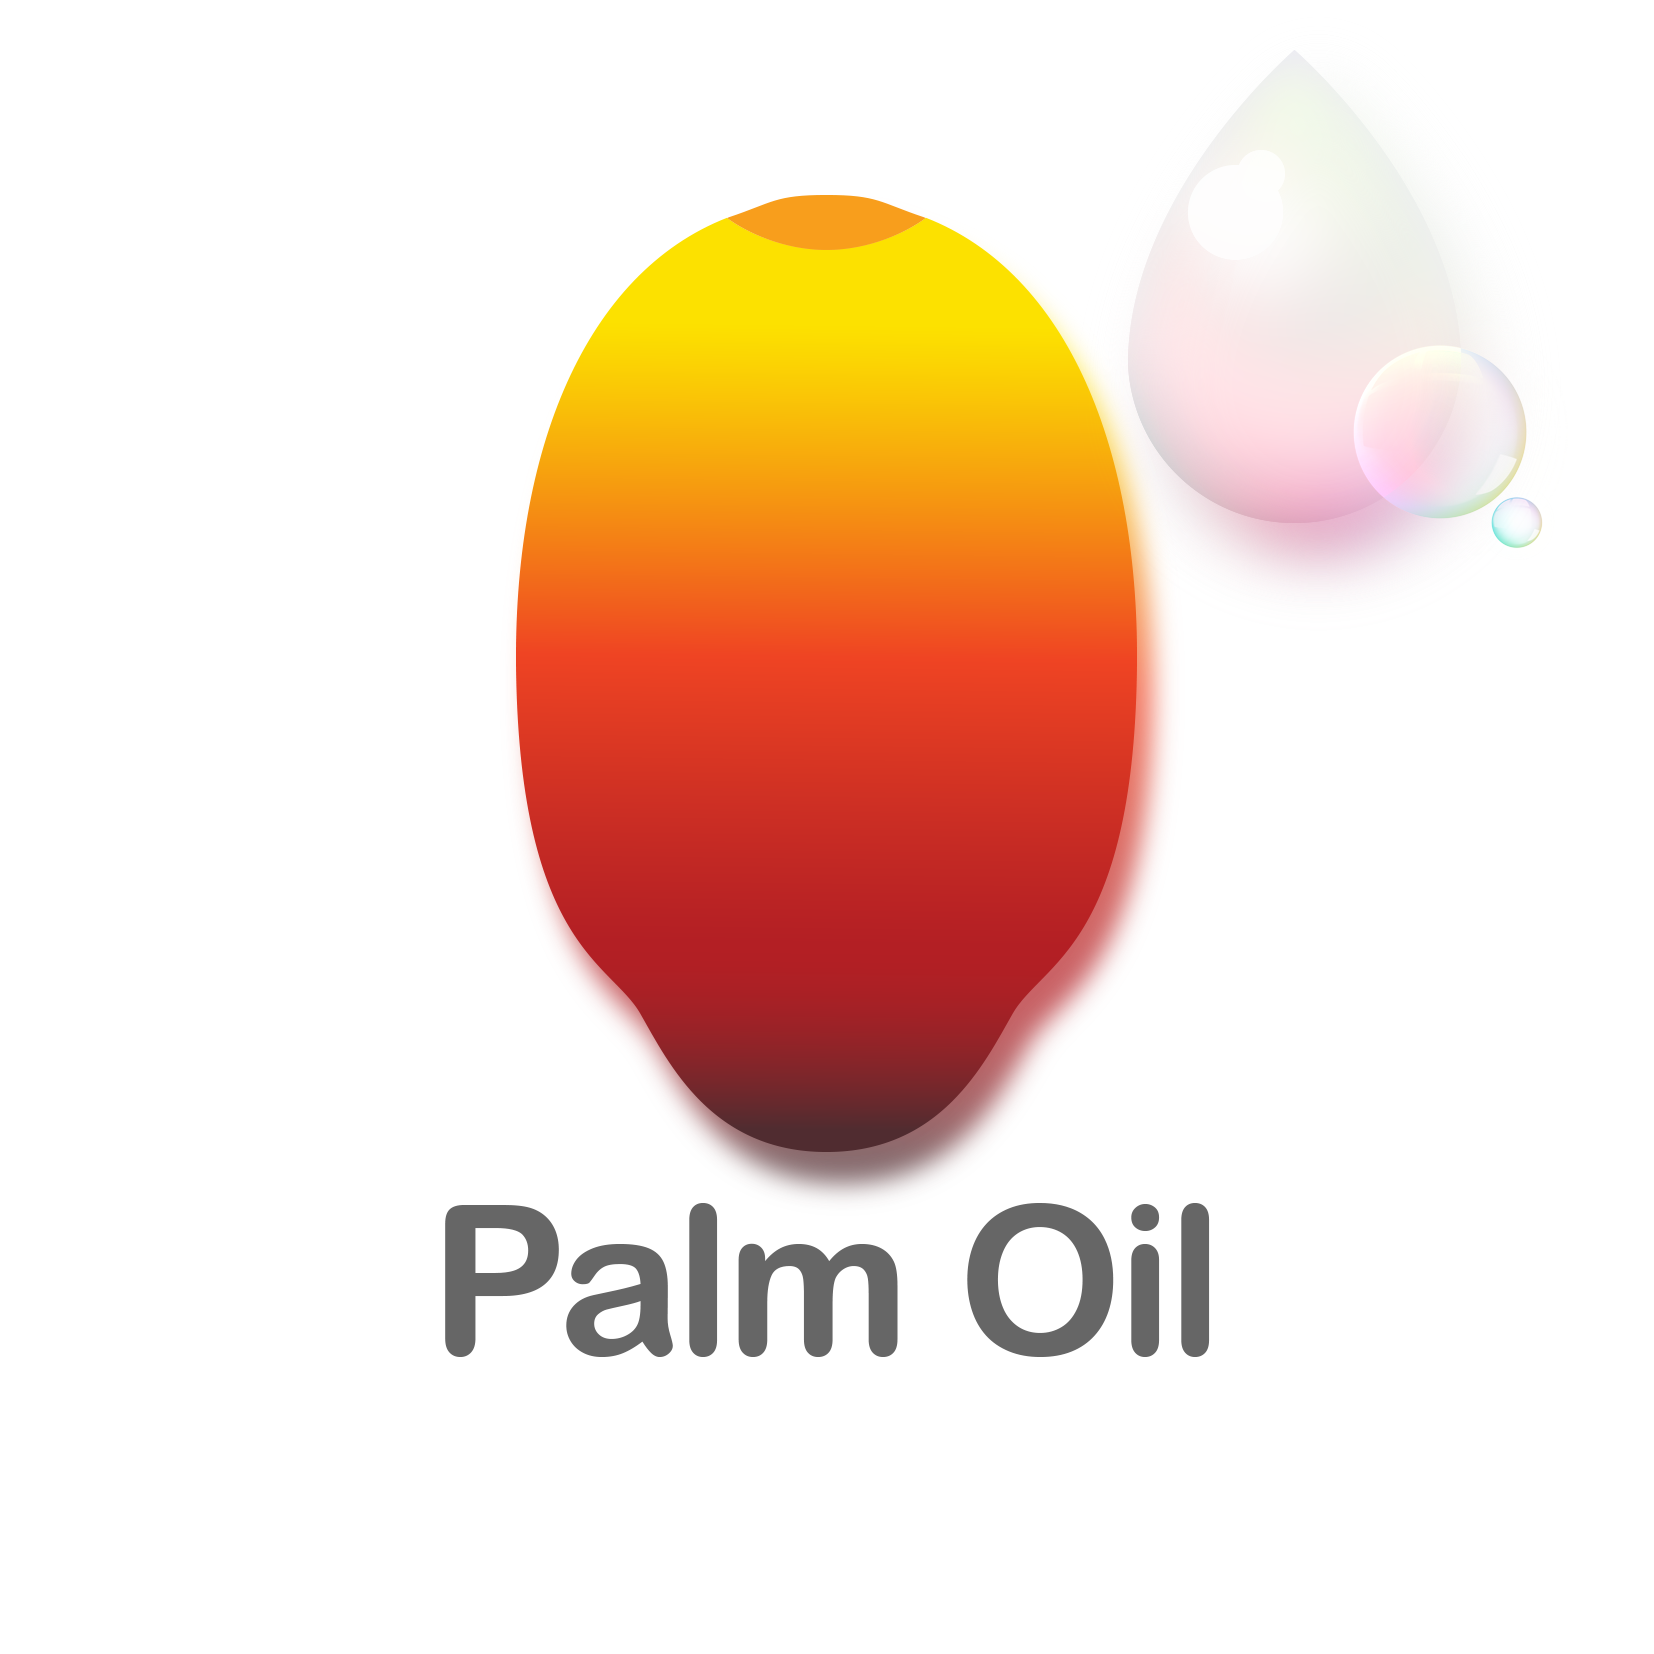 Palm Oil (Copy)